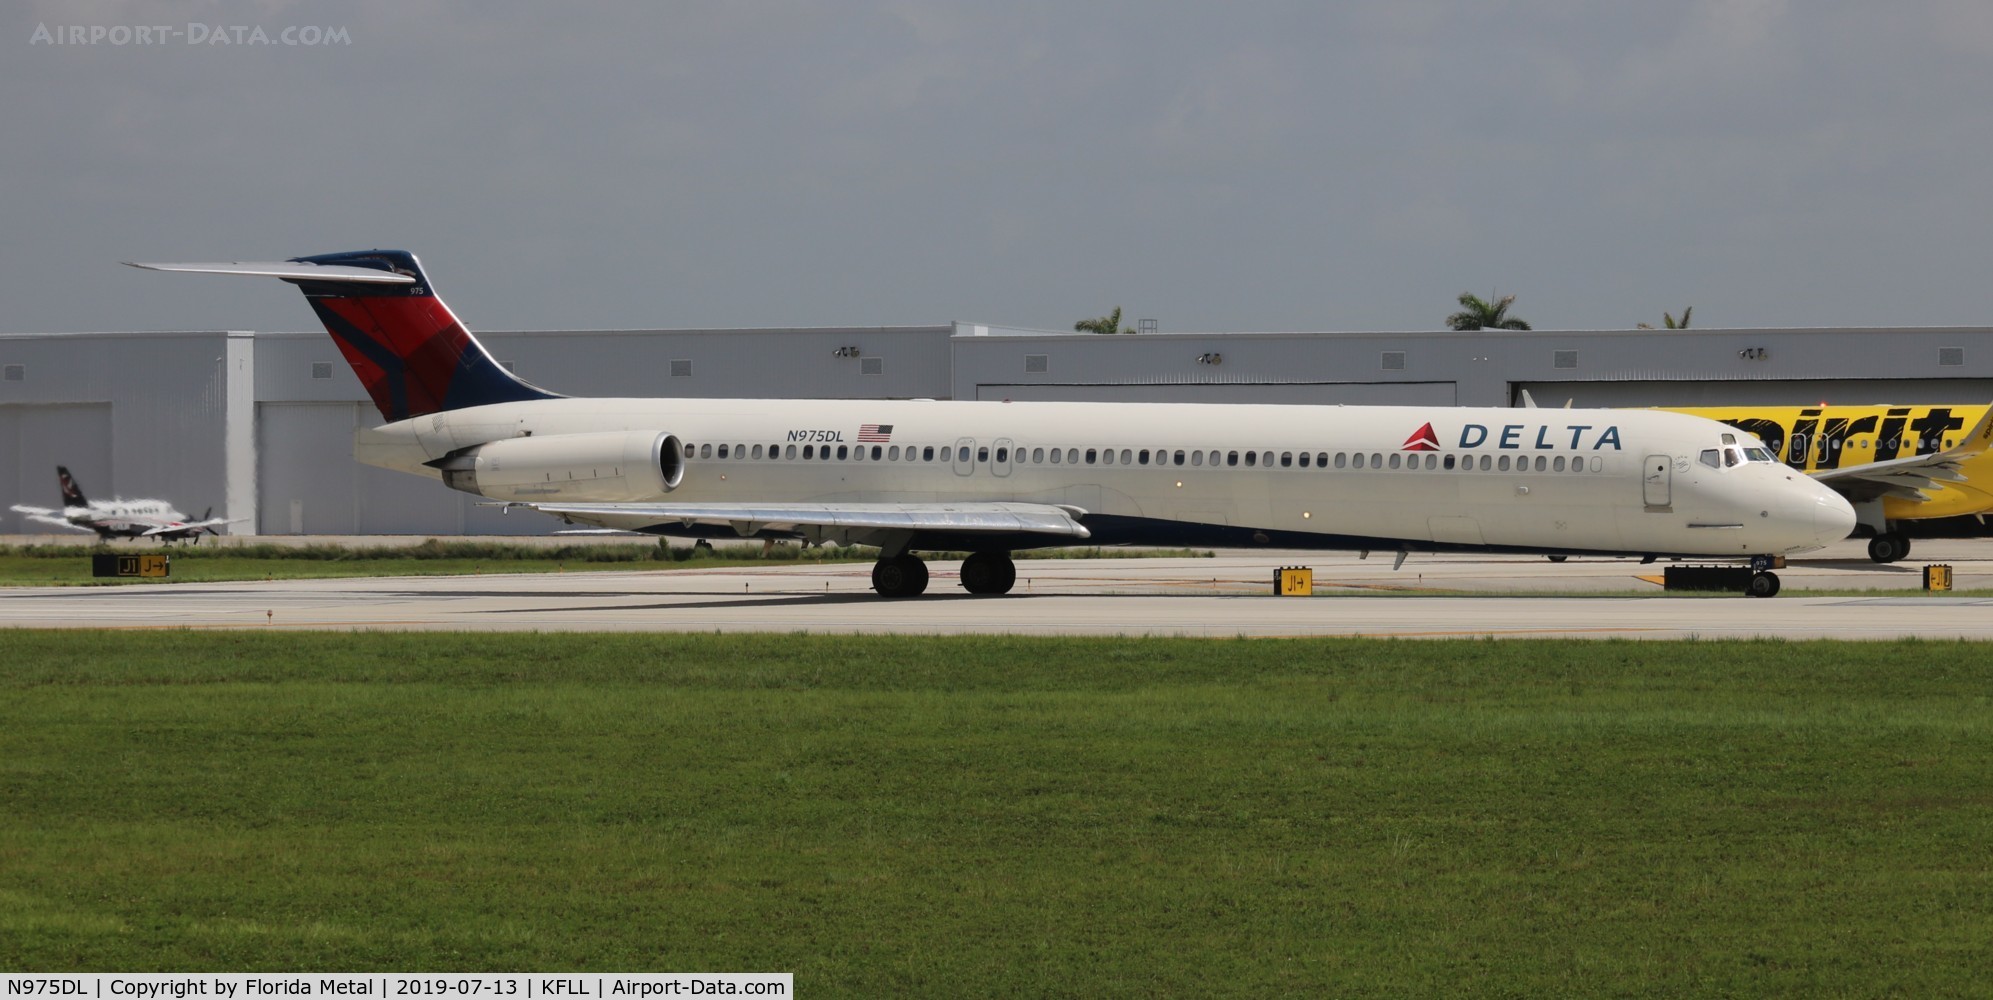 N975DL, 1991 McDonnell Douglas MD-88 C/N 53243, Delta